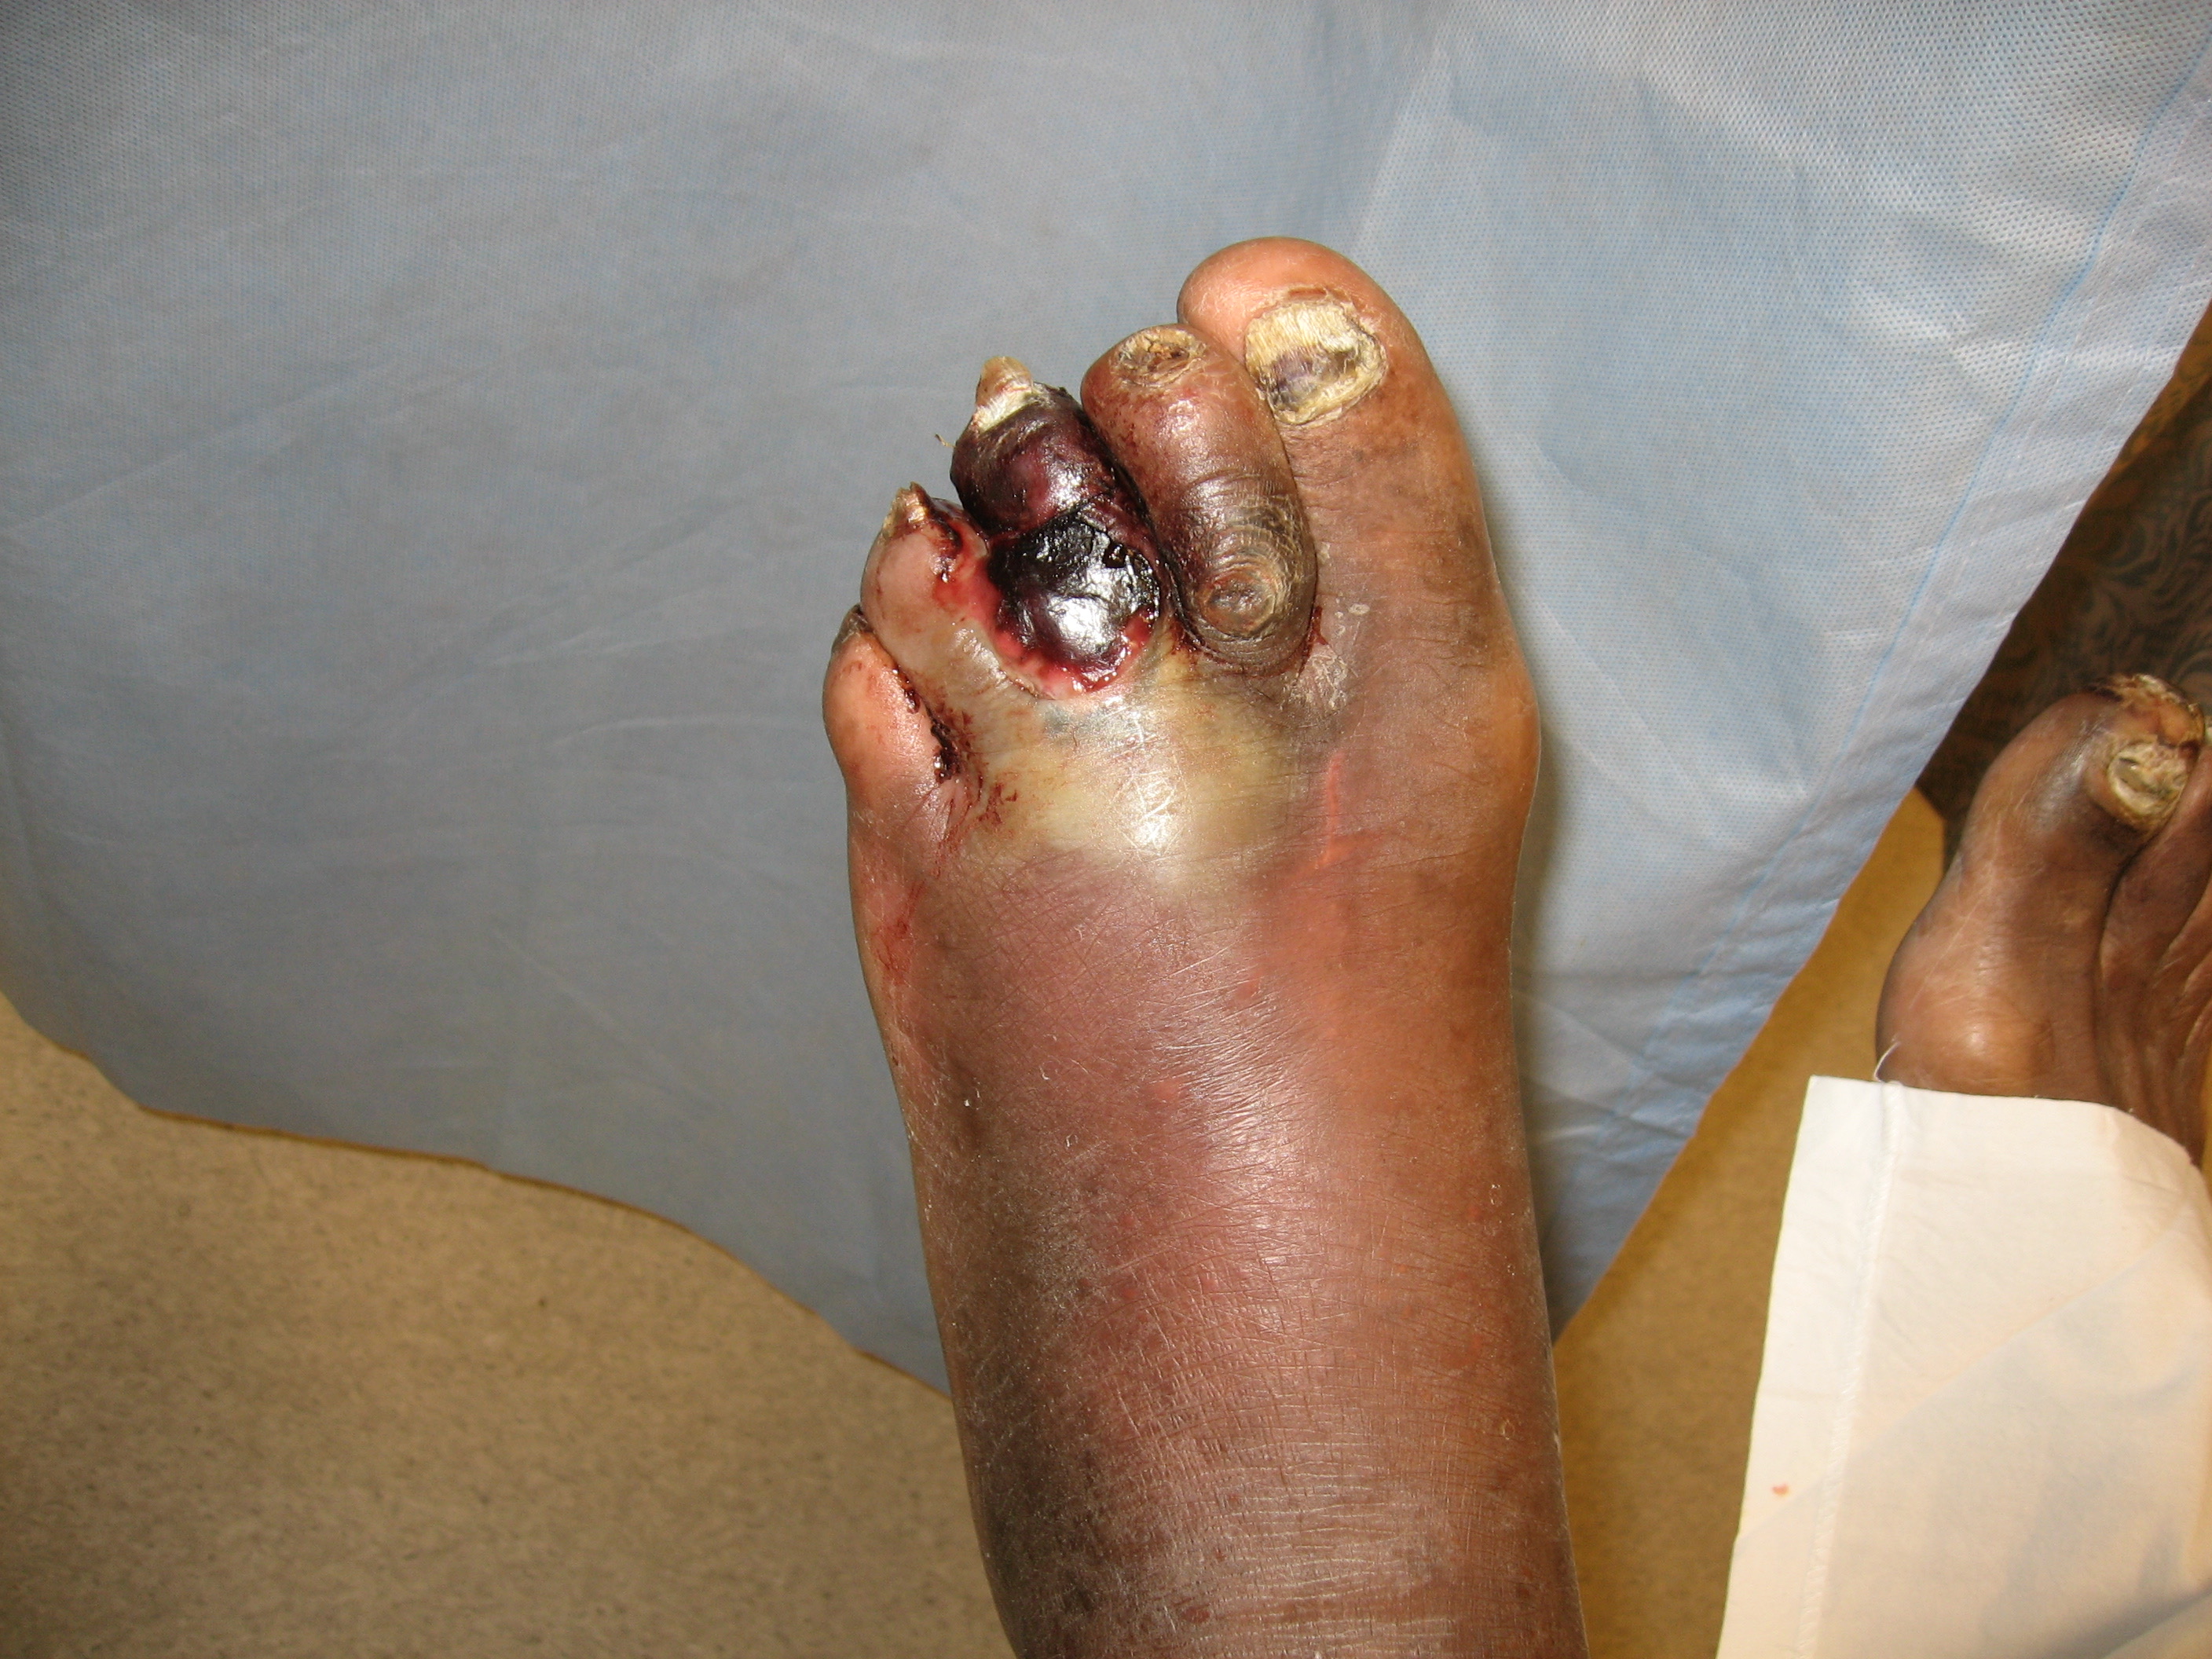 Gas gangrene of a diabetic foot